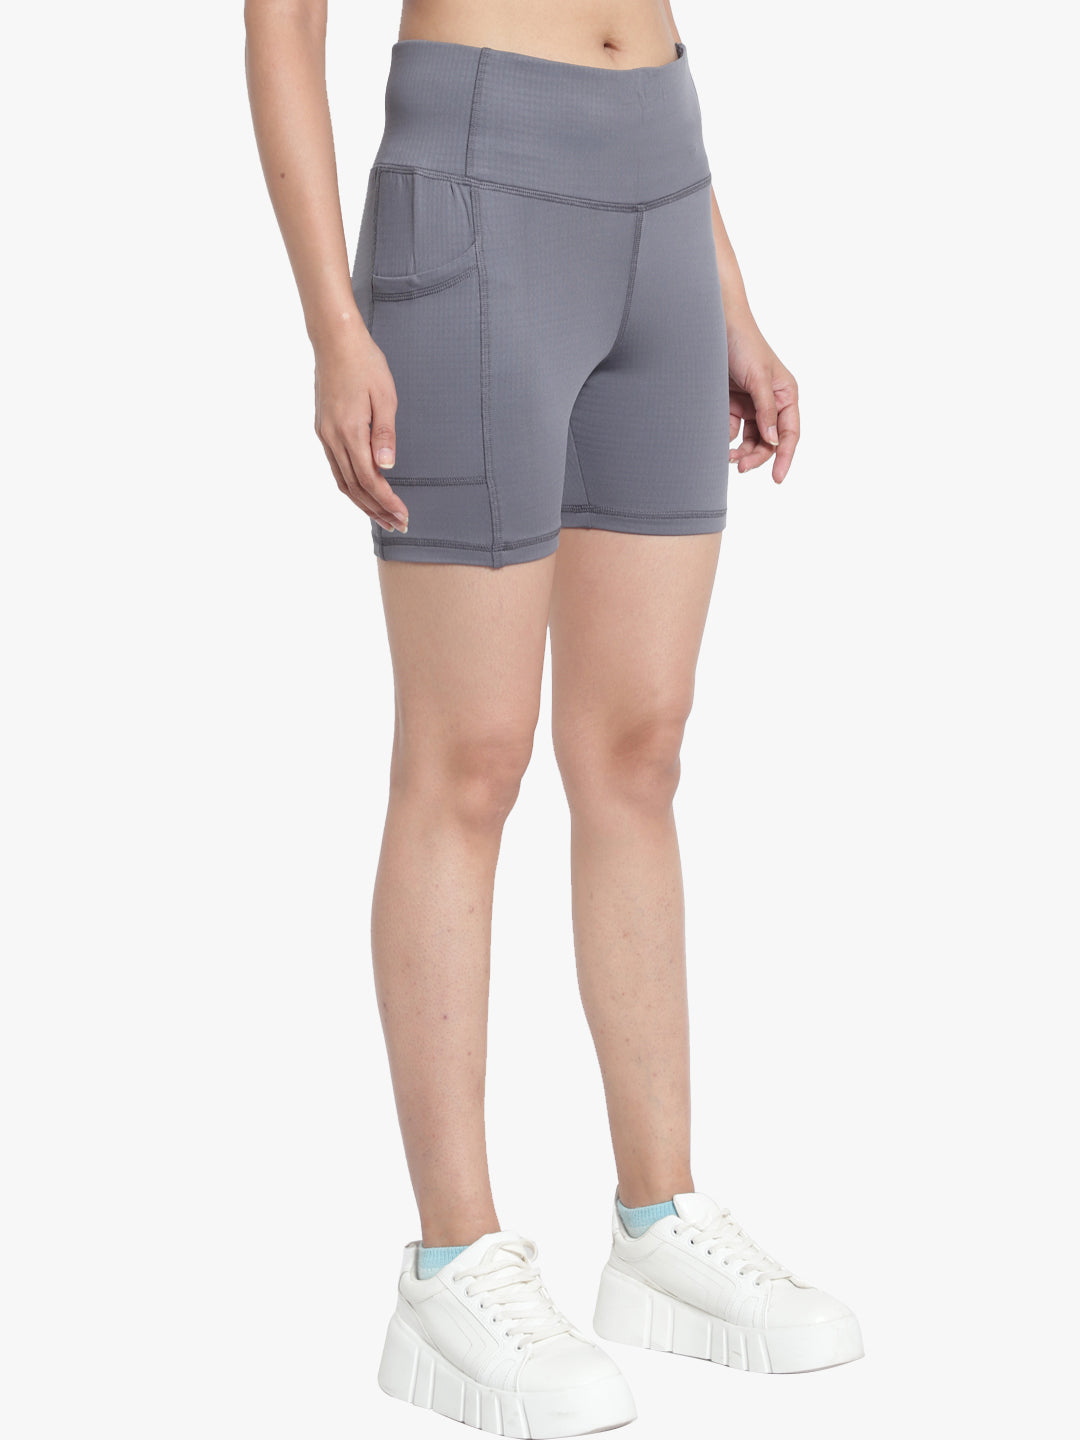 Mirage Shorts & Sports Bra Set - Light Grey